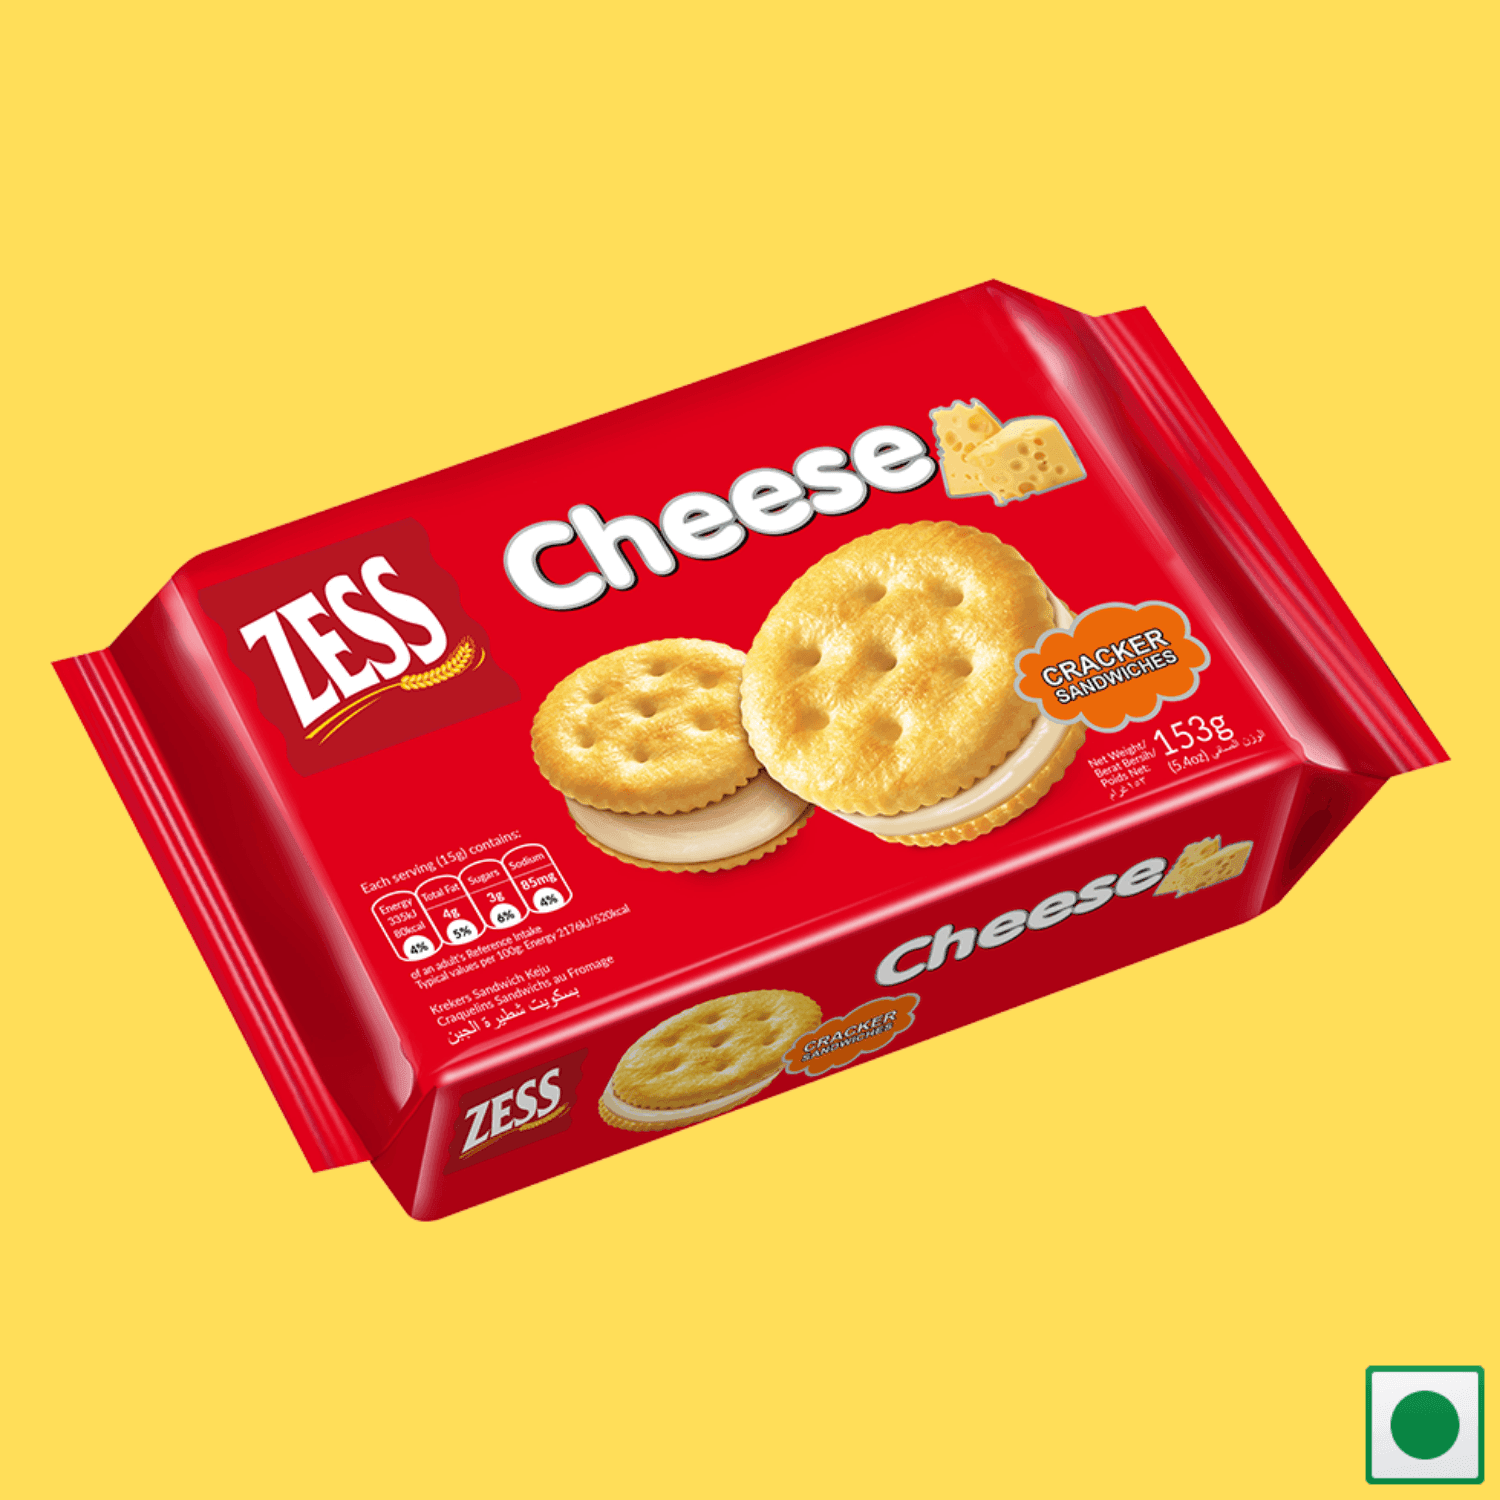 Zess Cracker Sandwiches Cheese, 153g (Imported) - Super 7 Mart